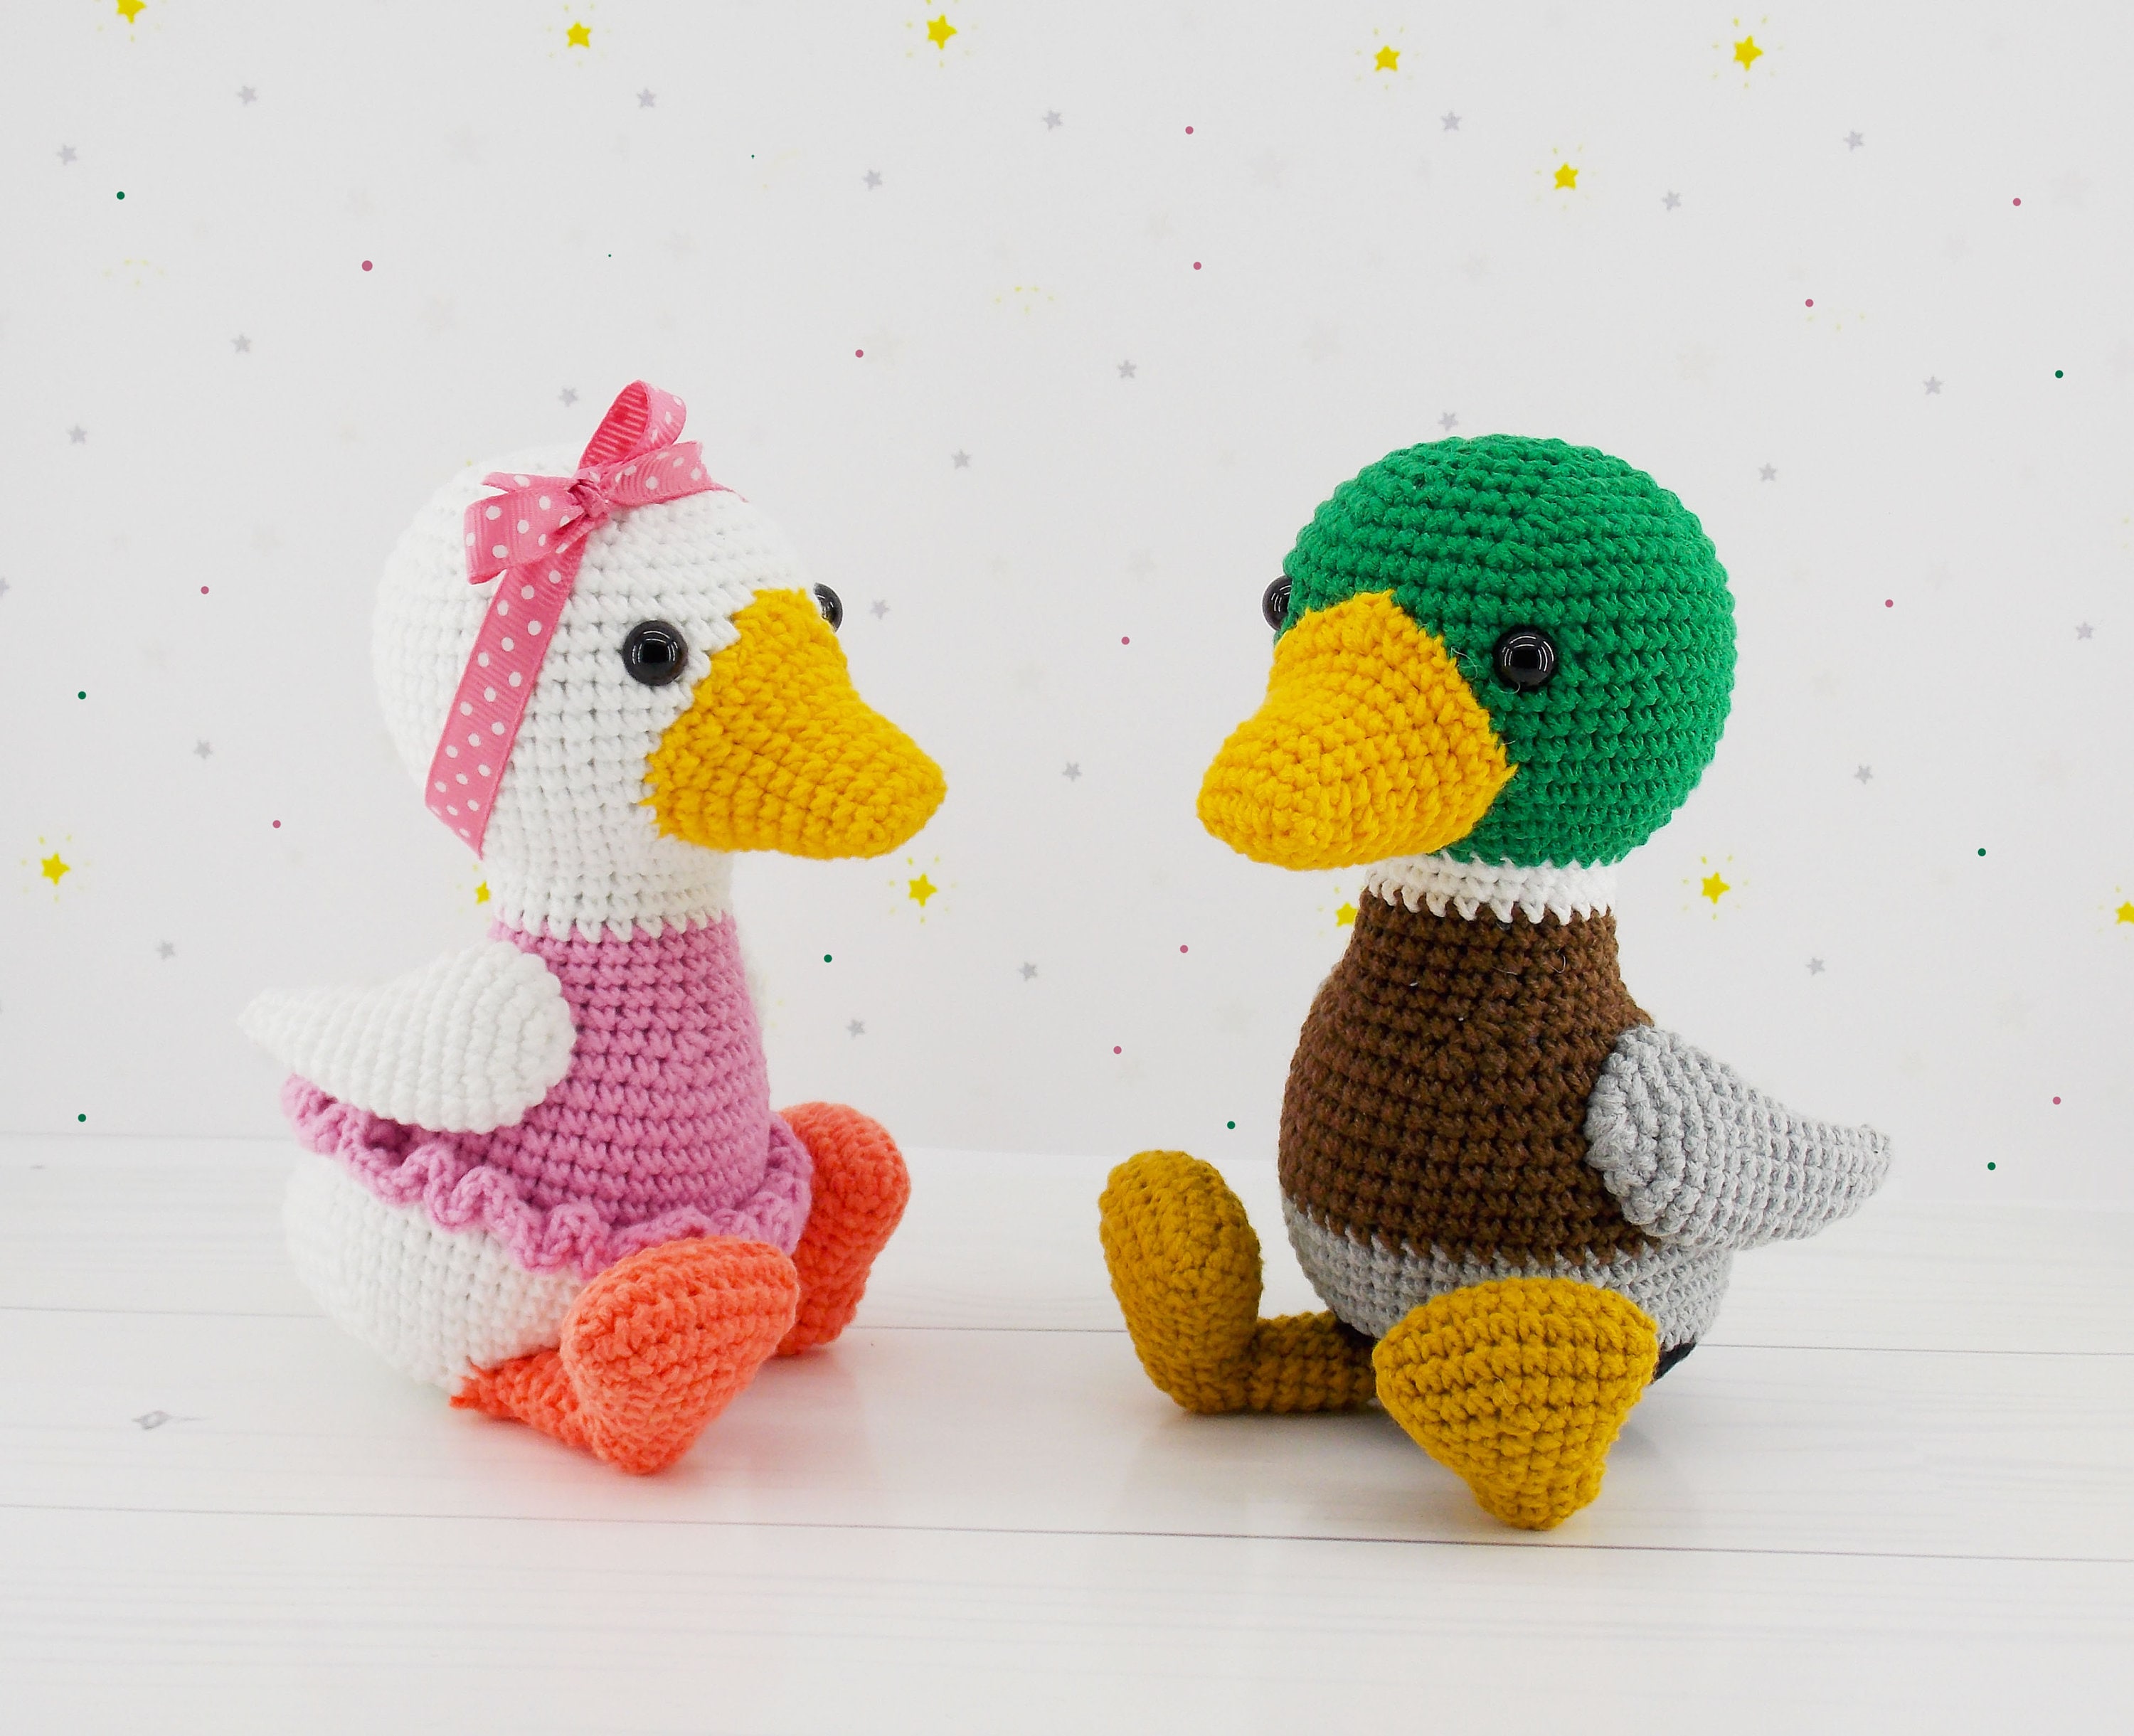 Amigurumi crochet pattern duck / crocheted mallard duck / | Etsy